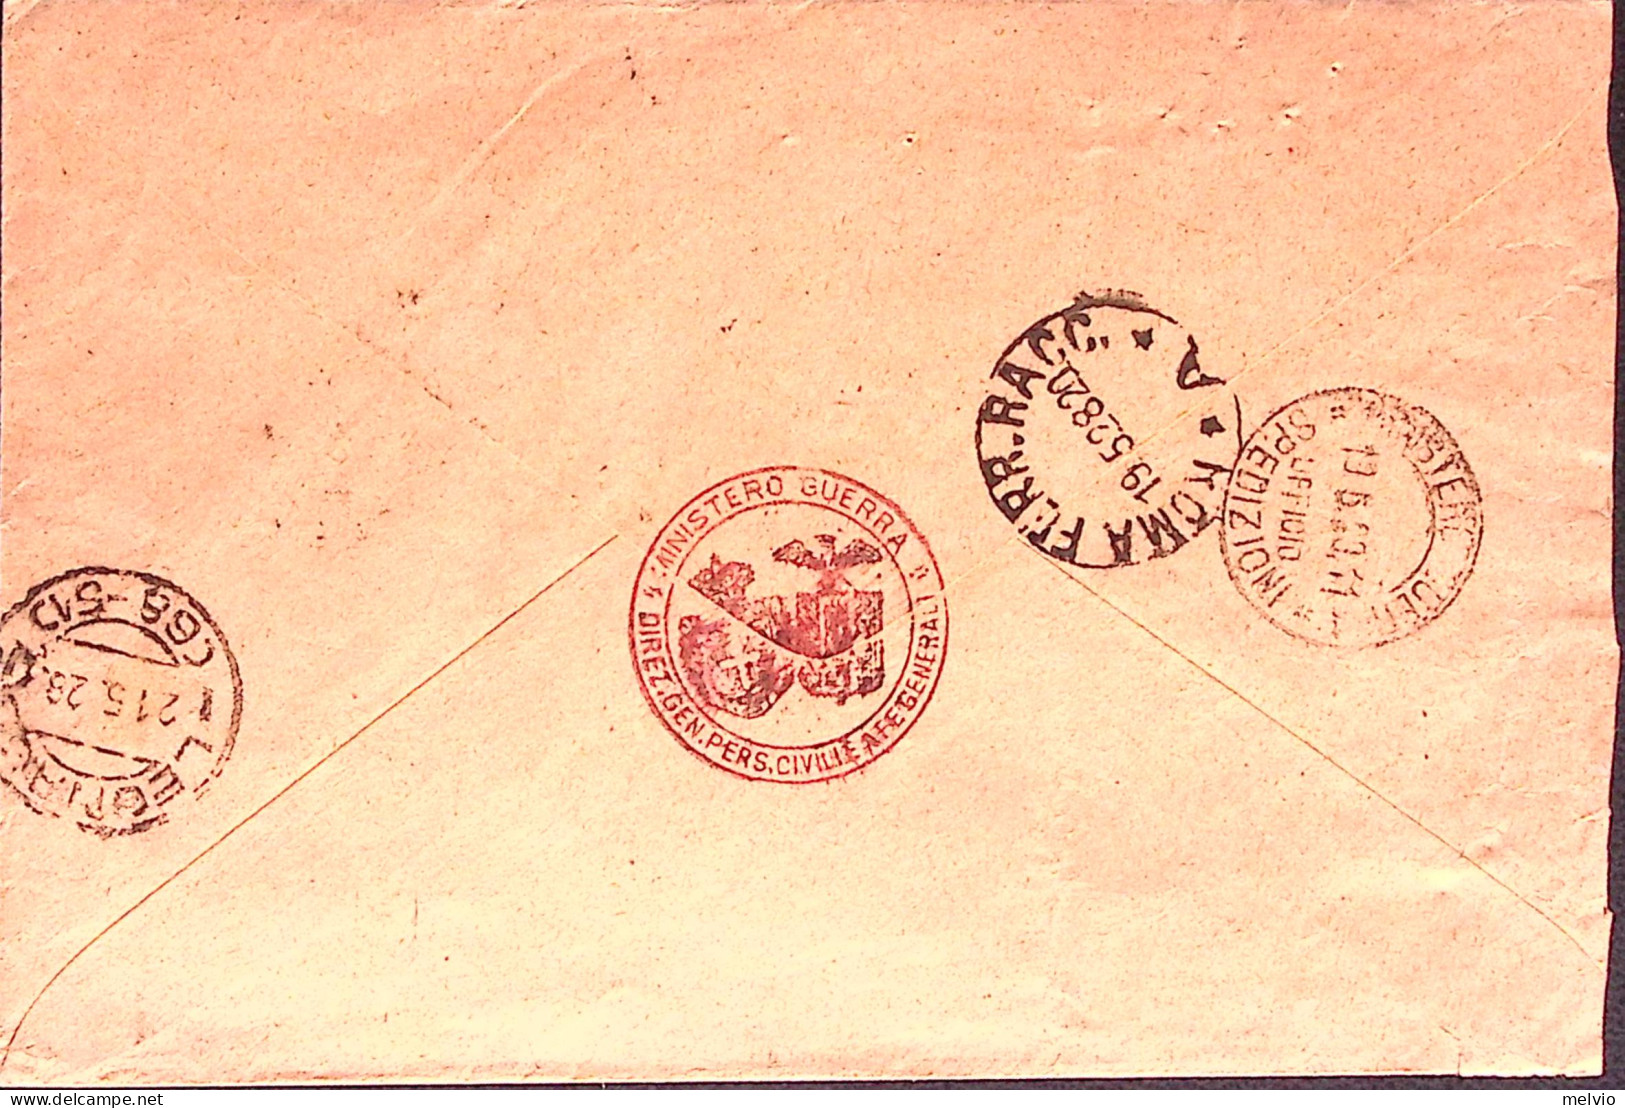 1928-EFFIGIE Lire 1,75 E C.50 Su Raccomandata Roma (19.5) - Poststempel